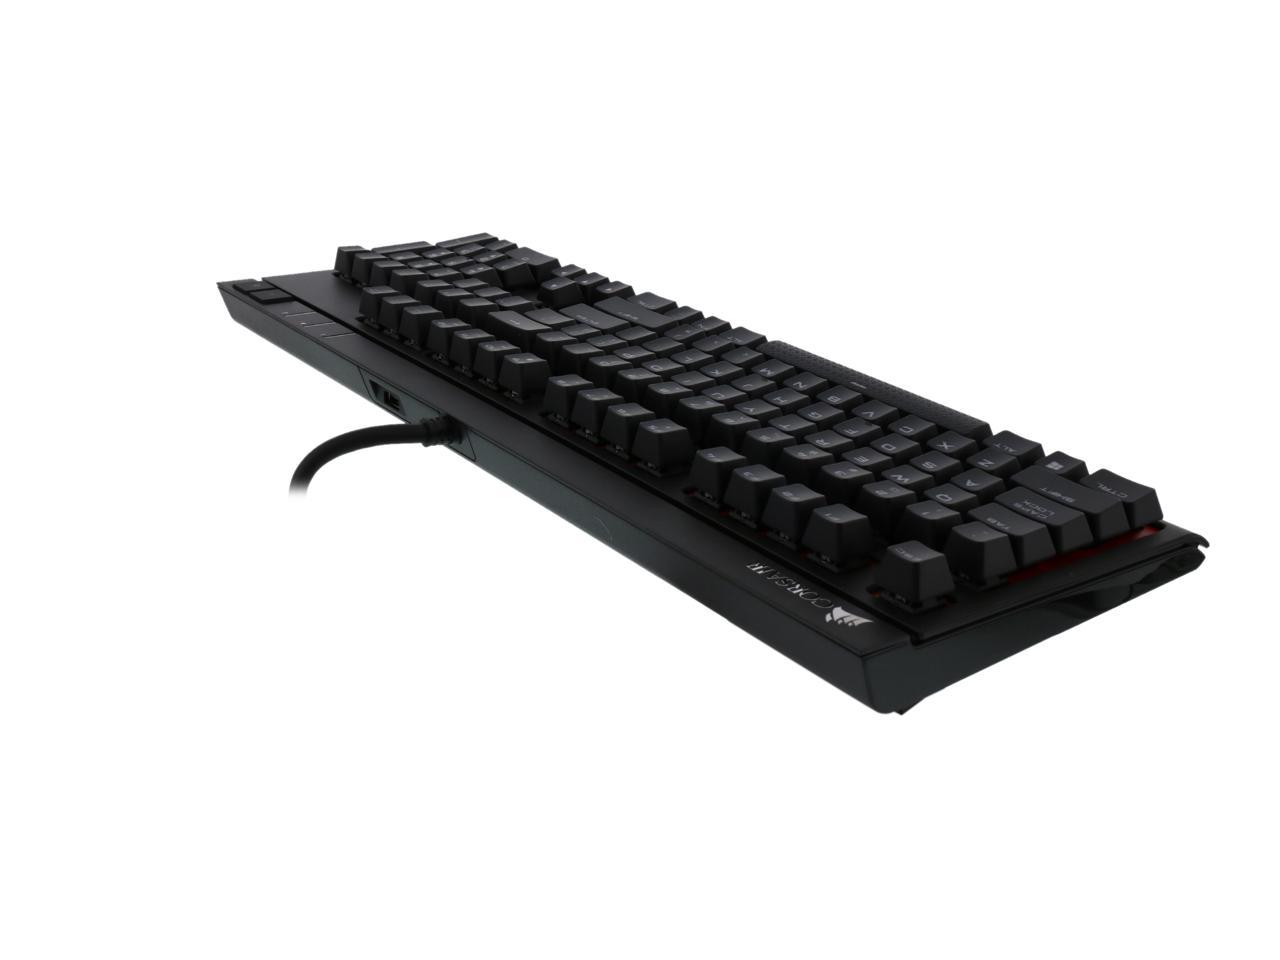 corsair strafe cherry mx red mechanical gaming keyboard